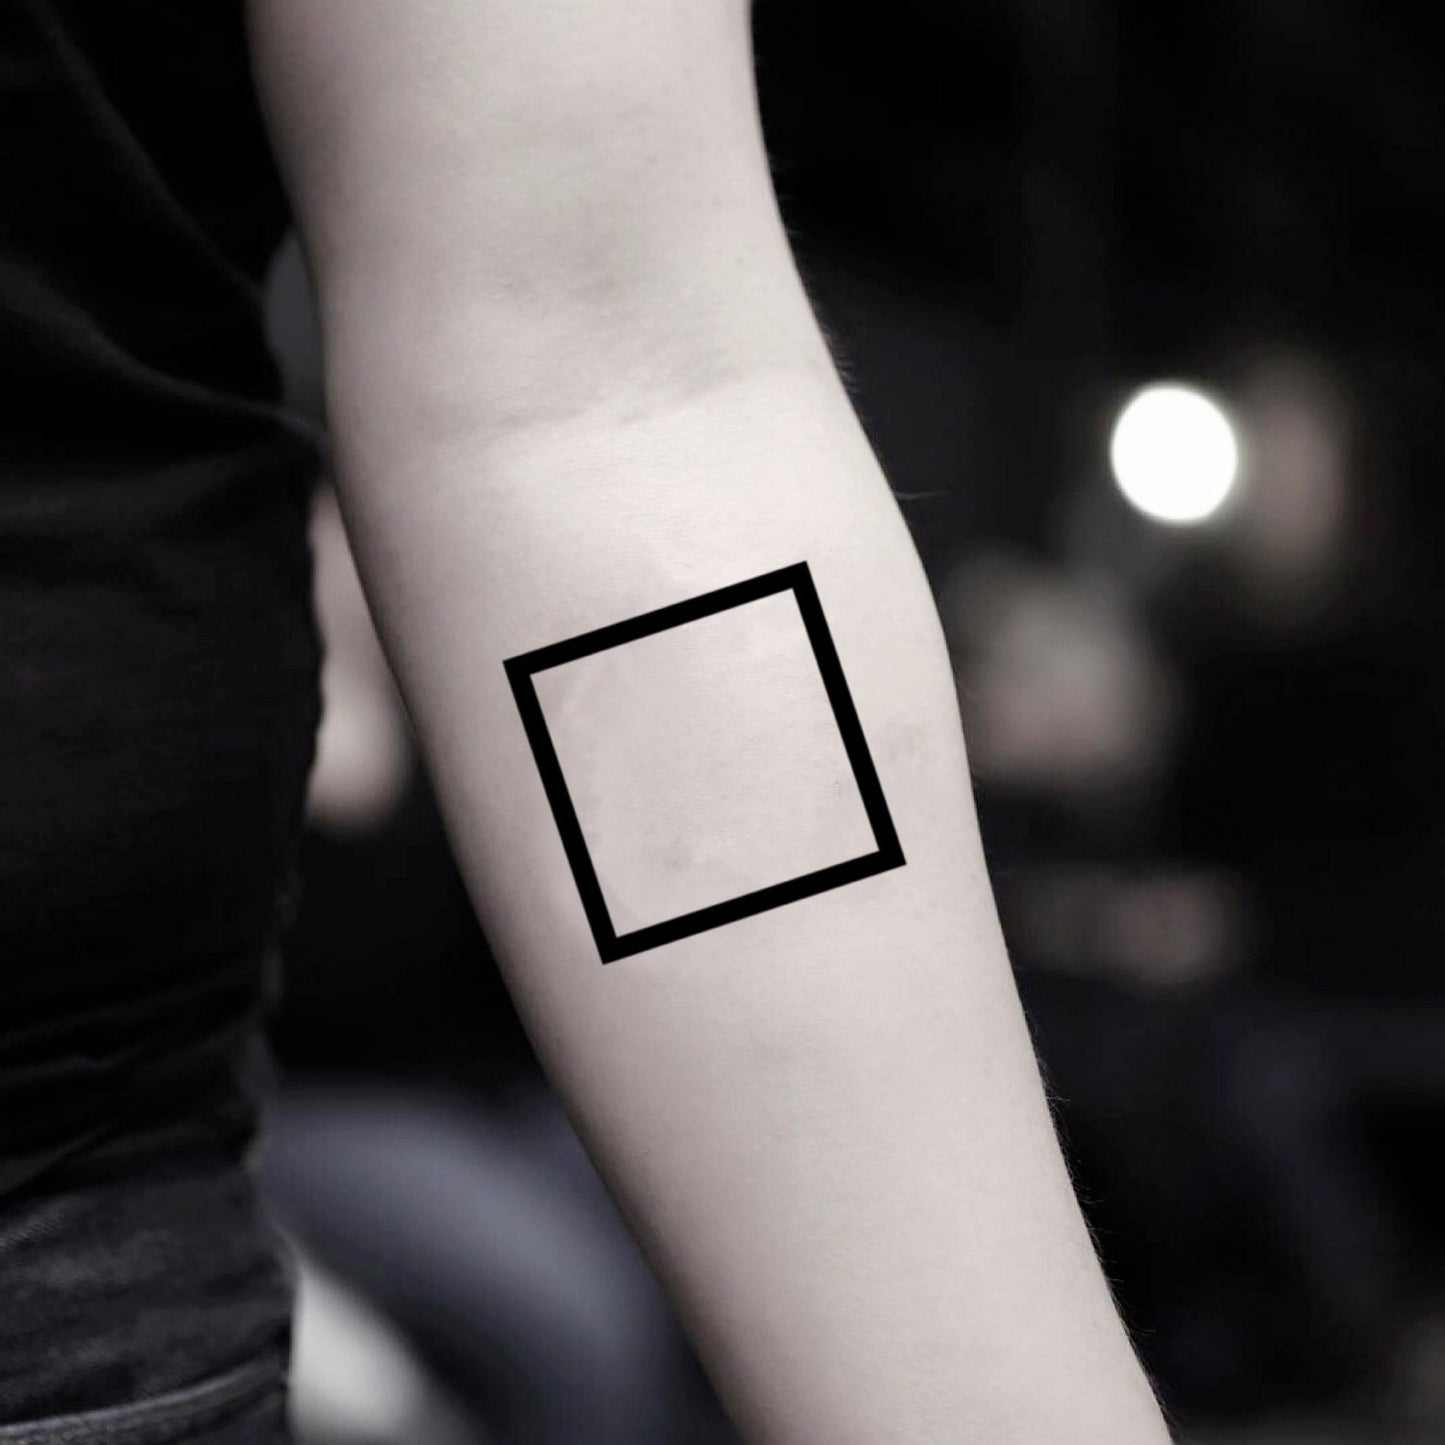 fake small black square geometric temporary tattoo sticker design idea on inner arm